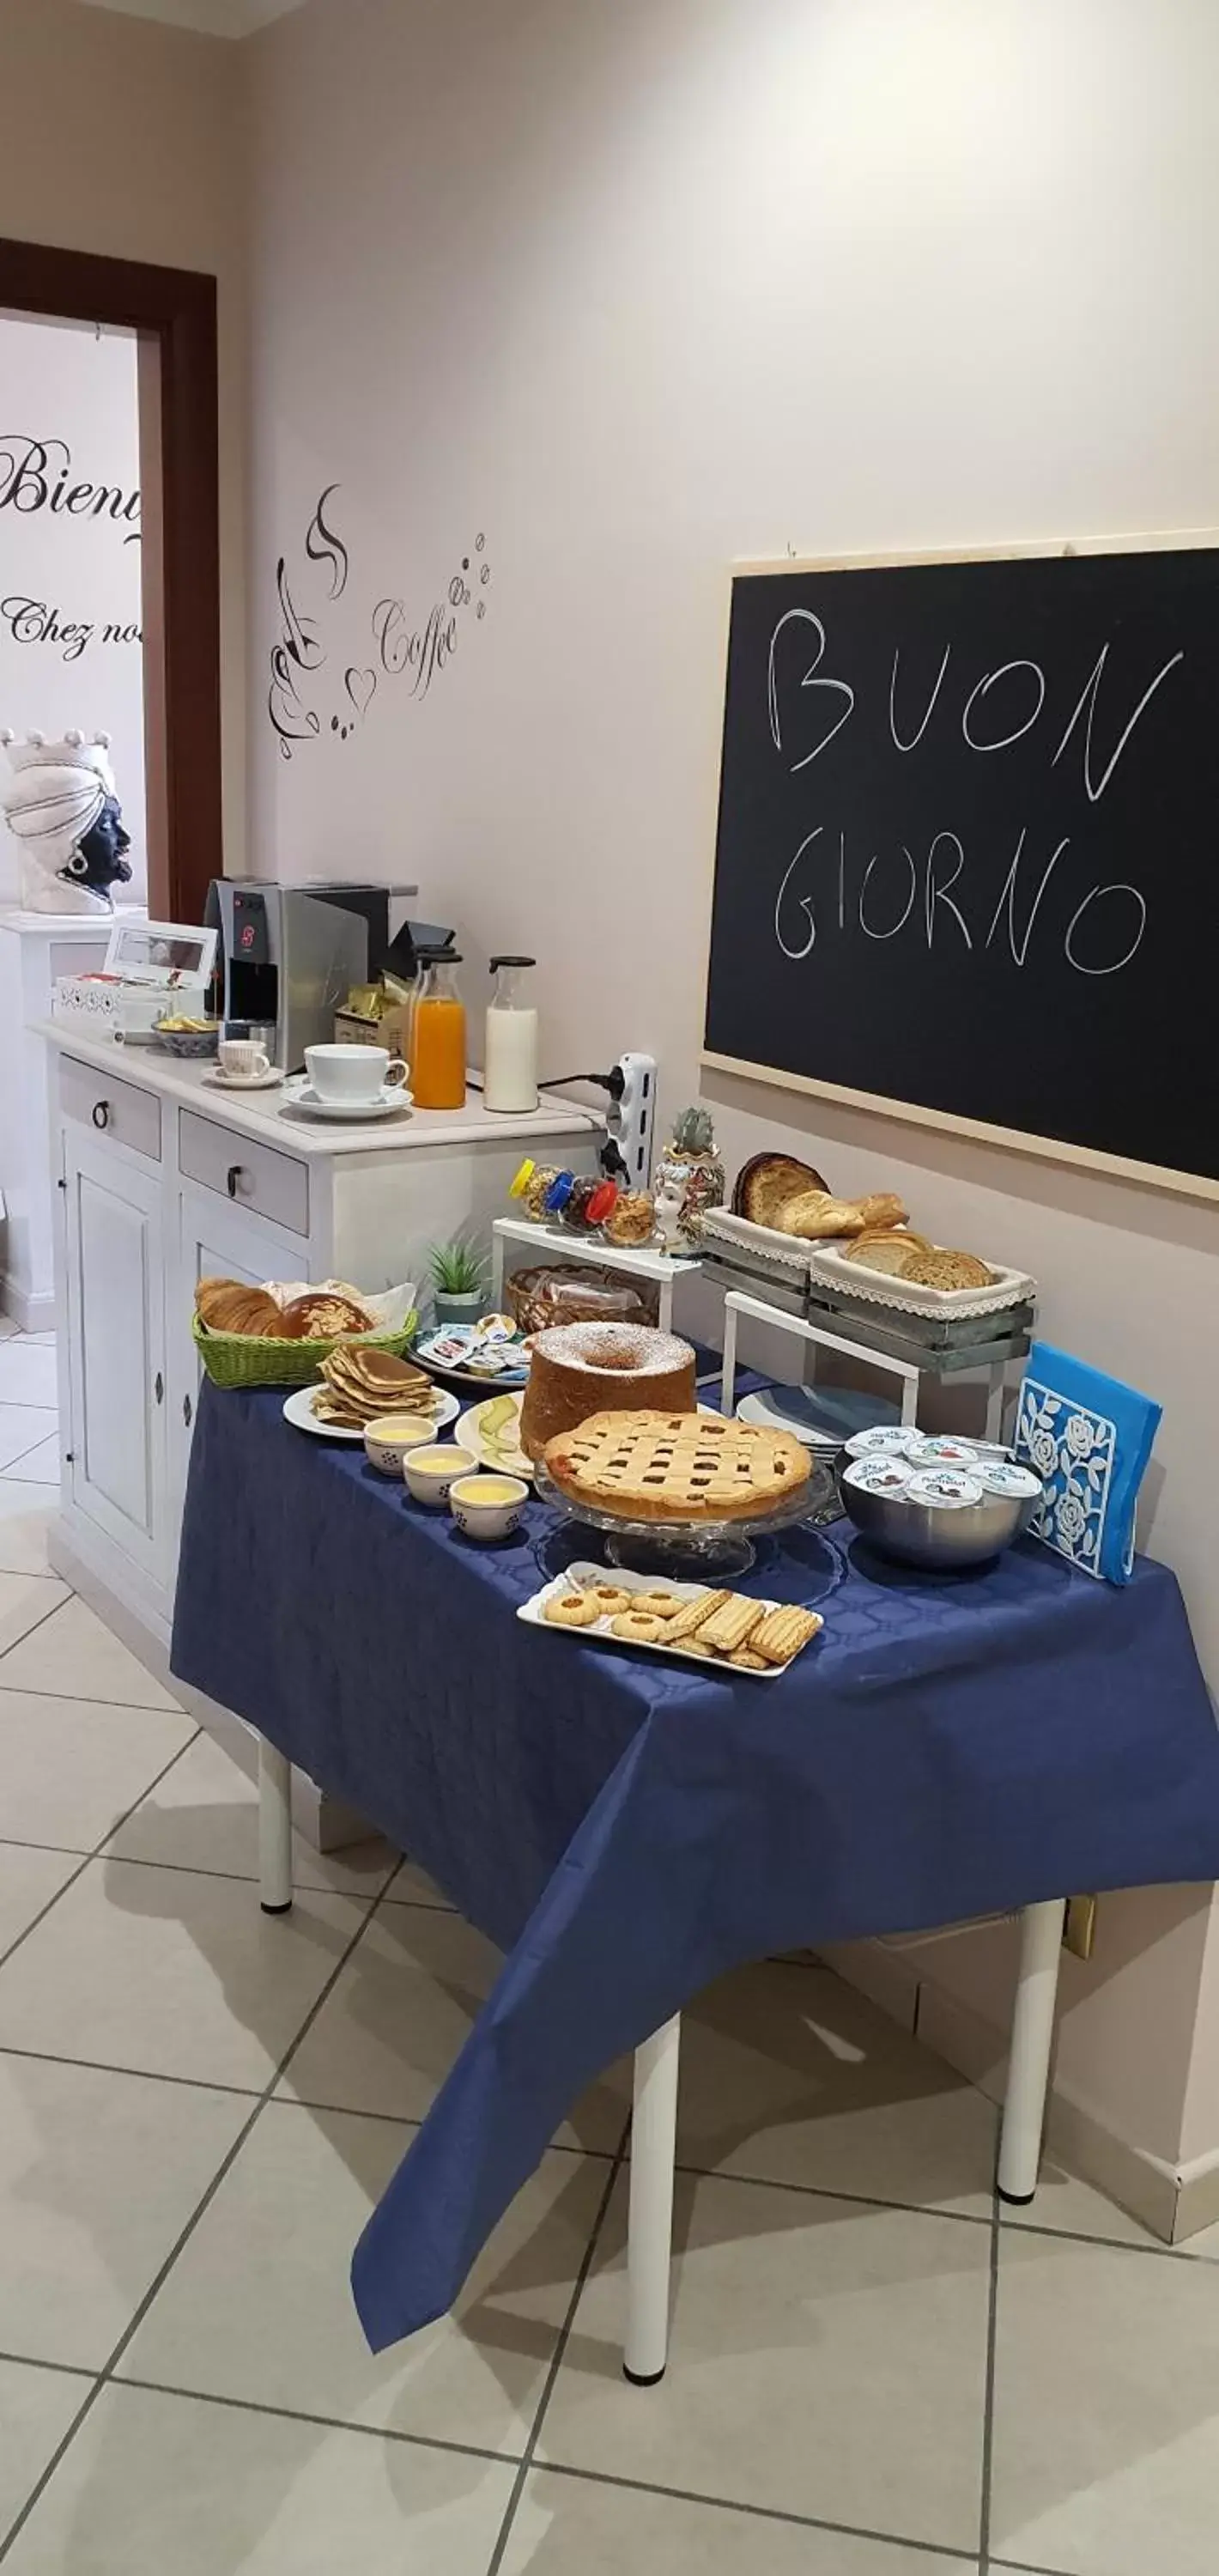 Buffet breakfast in La Rosa dei venti